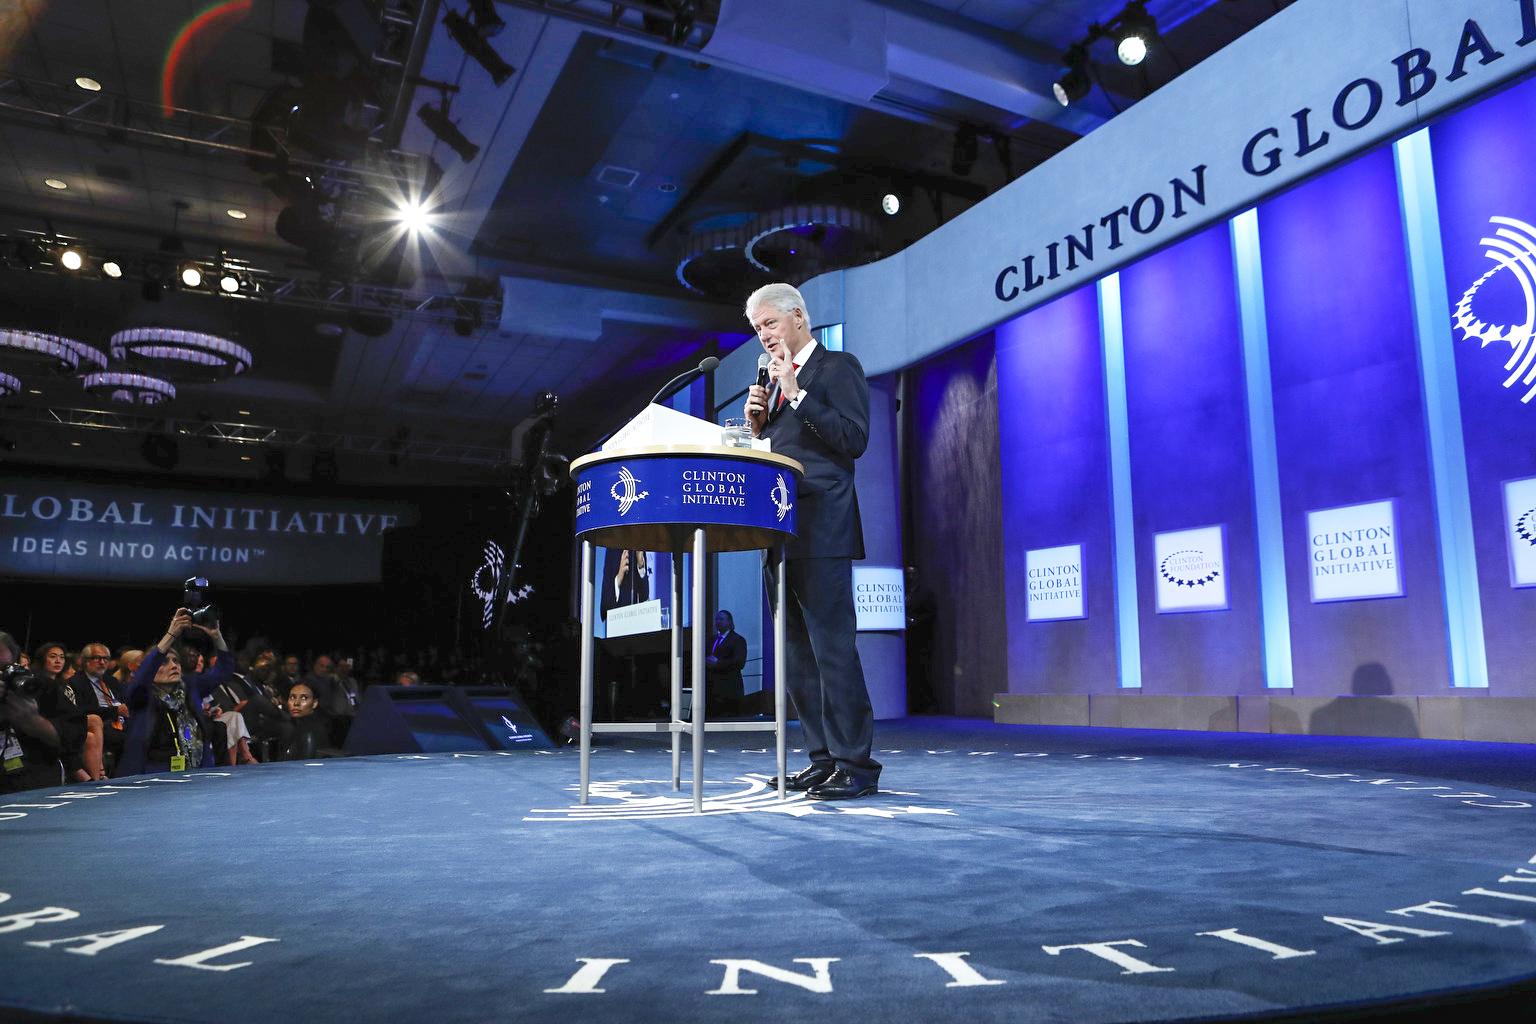 Clinton Global Initiative September 2022 Meeting – Clinton Foundation